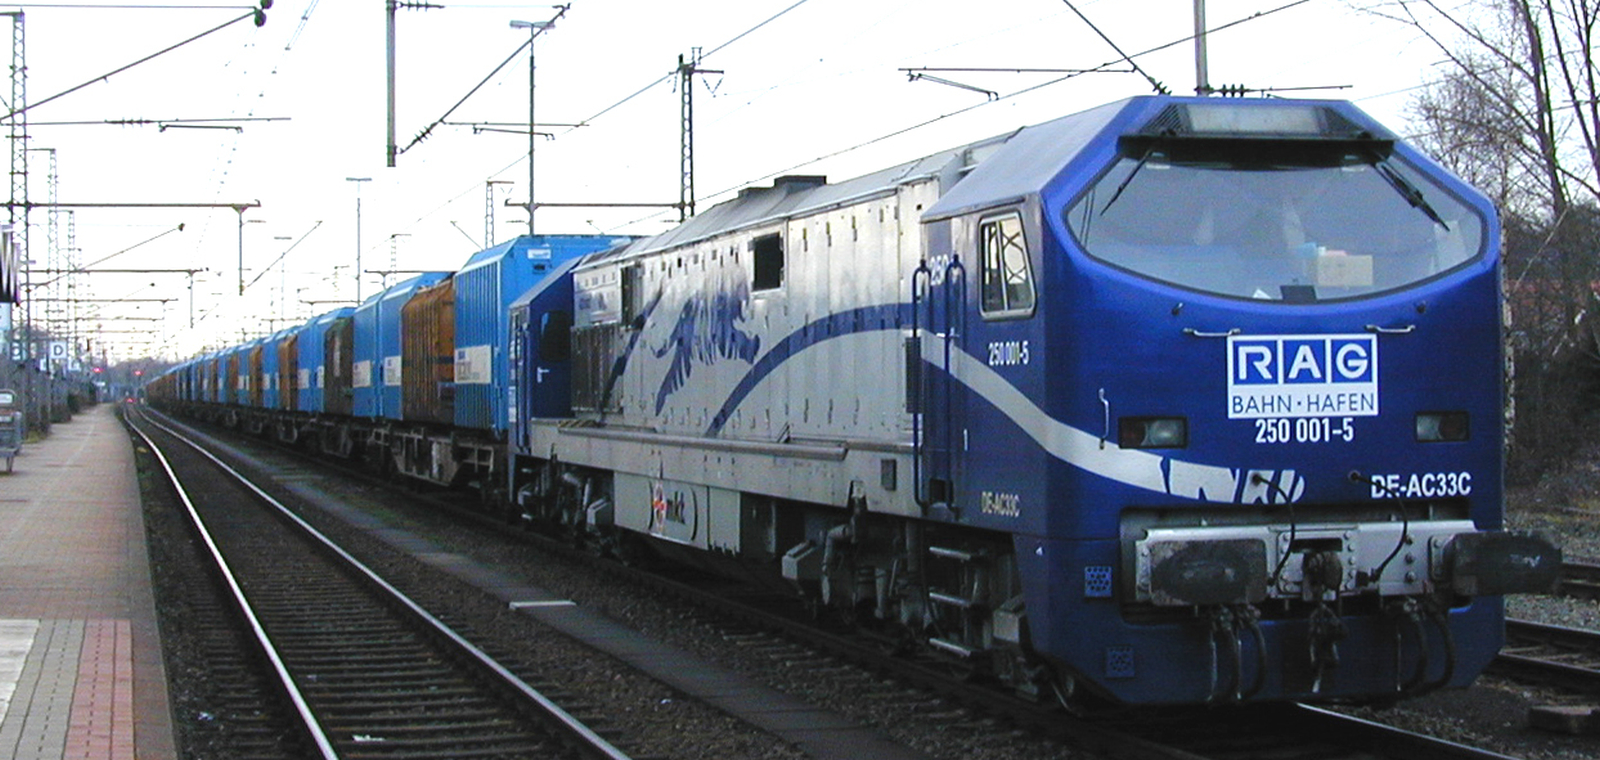 RAG 250 001 in January 2002 in Bad Bentheim